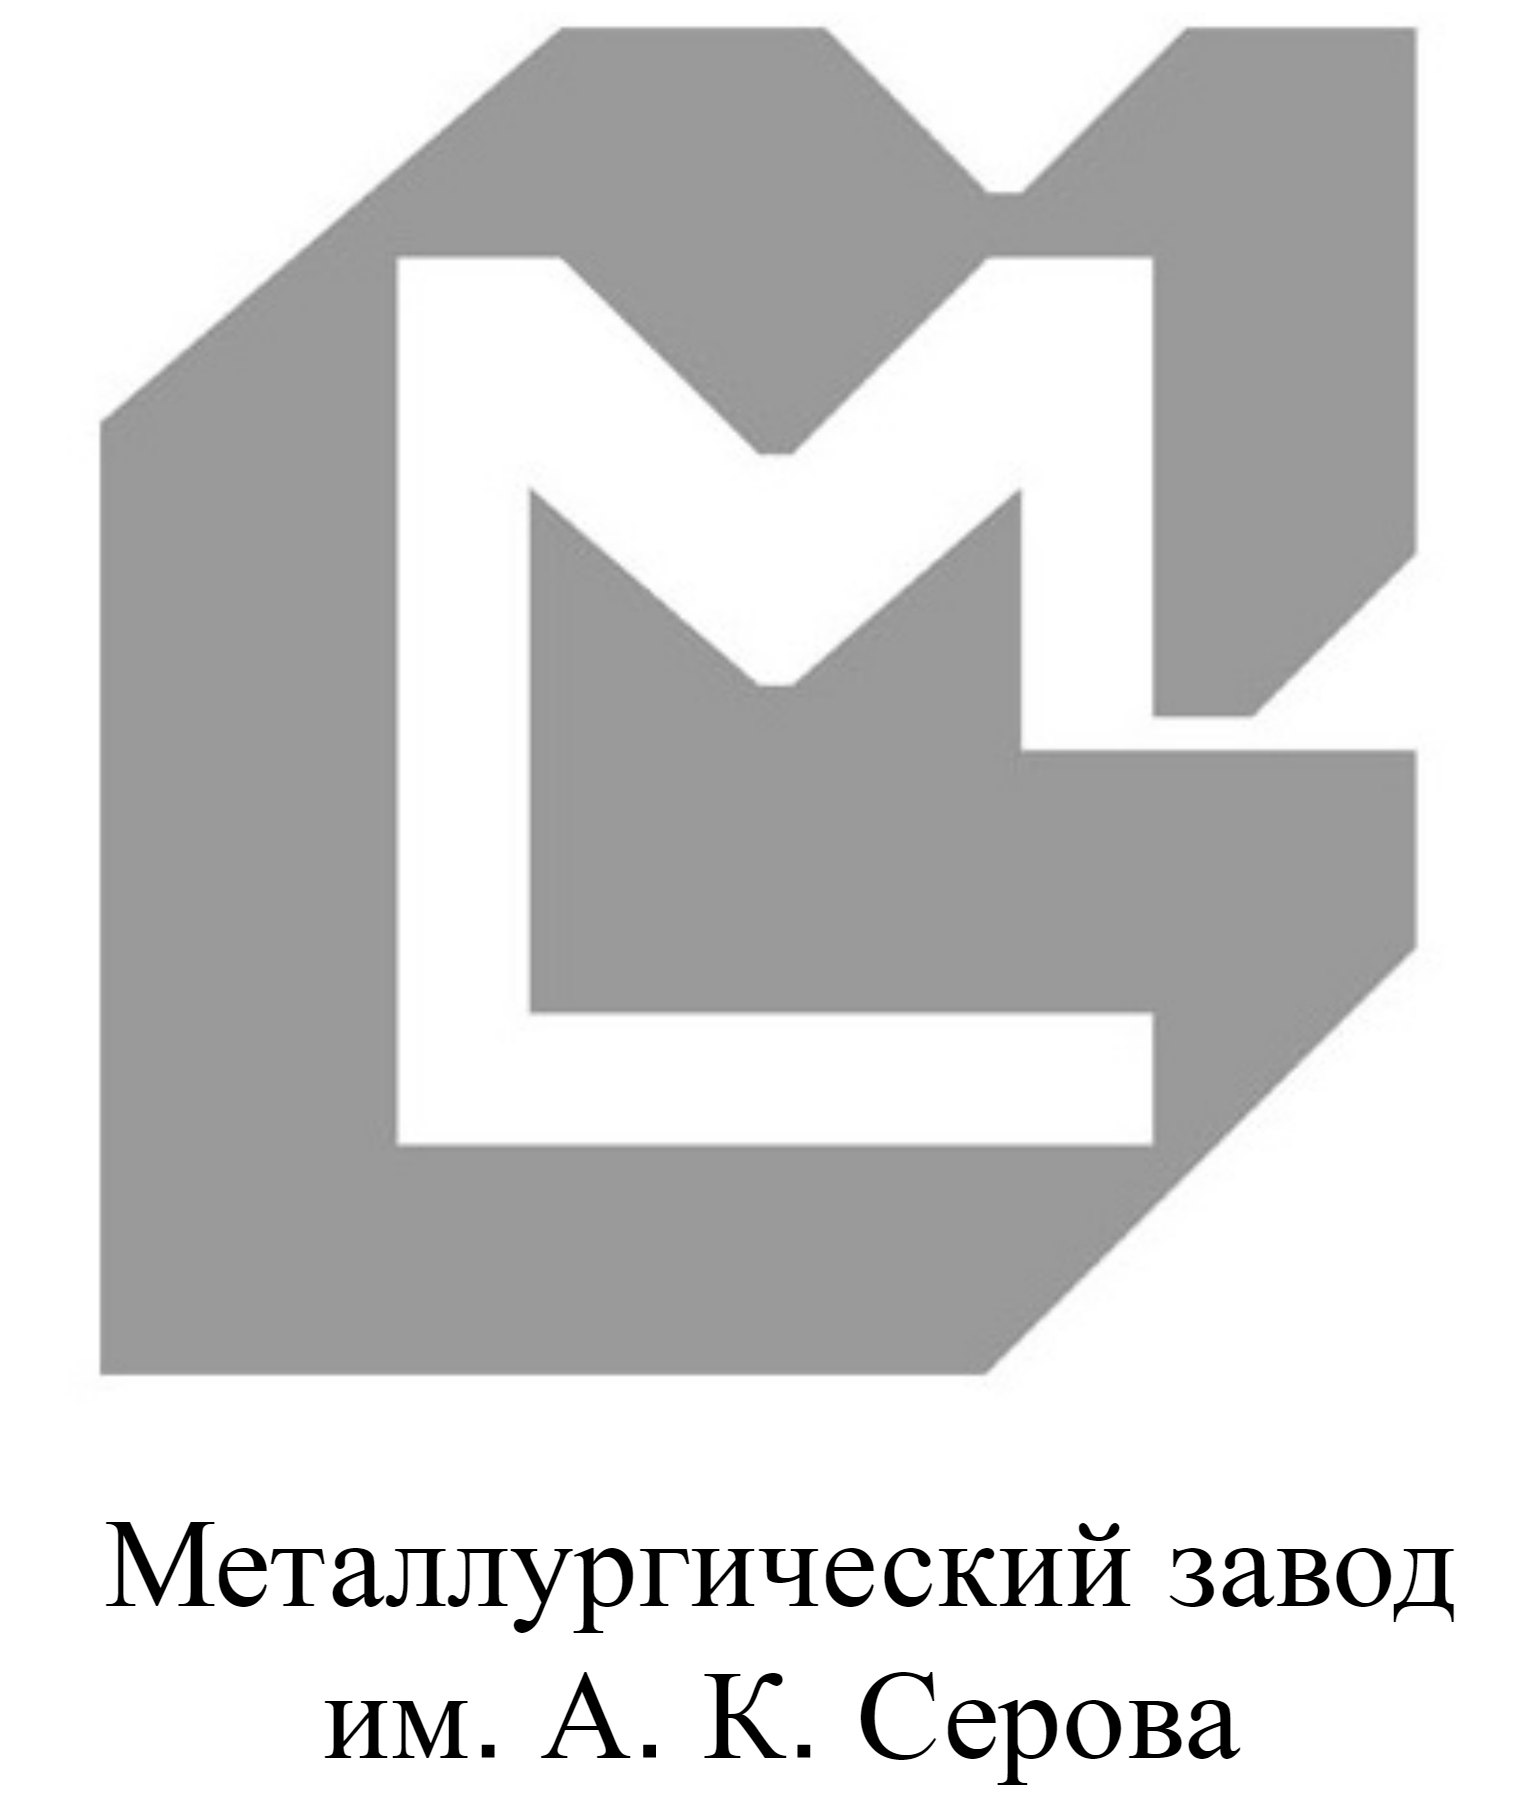 uploads/klienti/metallurgicheskij_zavod_im._a._k._serova.jpg